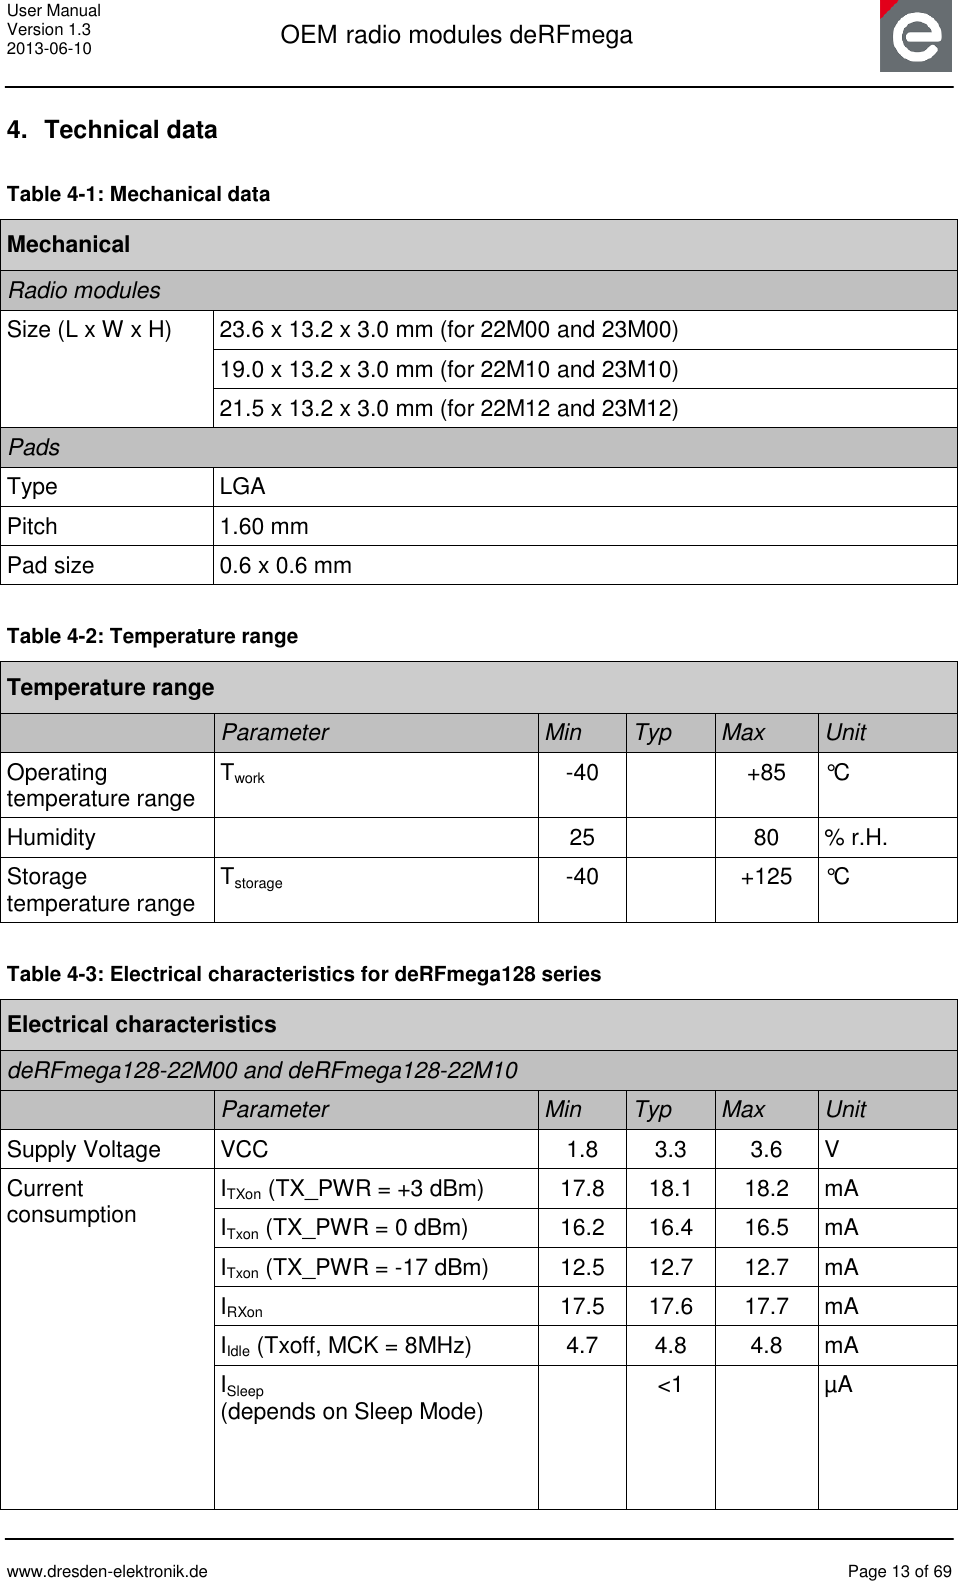 User Manual Version 1.3 2013-06-10  OEM radio modules deRFmega      www.dresden-elektronik.de  Page 13 of 69  4.  Technical data Table 4-1: Mechanical data Mechanical Radio modules Size (L x W x H) 23.6 x 13.2 x 3.0 mm (for 22M00 and 23M00) 19.0 x 13.2 x 3.0 mm (for 22M10 and 23M10) 21.5 x 13.2 x 3.0 mm (for 22M12 and 23M12) Pads Type LGA Pitch 1.60 mm Pad size 0.6 x 0.6 mm  Table 4-2: Temperature range Temperature range  Parameter Min Typ Max Unit Operating temperature range Twork -40  +85 °C Humidity  25  80 % r.H. Storage temperature range Tstorage -40  +125 °C  Table 4-3: Electrical characteristics for deRFmega128 series Electrical characteristics deRFmega128-22M00 and deRFmega128-22M10  Parameter Min Typ Max Unit Supply Voltage VCC 1.8 3.3 3.6 V Current  consumption  ITXon (TX_PWR = +3 dBm) 17.8 18.1 18.2 mA ITxon (TX_PWR = 0 dBm) 16.2 16.4 16.5 mA ITxon (TX_PWR = -17 dBm) 12.5 12.7 12.7 mA IRXon 17.5 17.6 17.7 mA IIdle (Txoff, MCK = 8MHz) 4.7 4.8 4.8 mA ISleep  (depends on Sleep Mode)     &lt;1  µA 